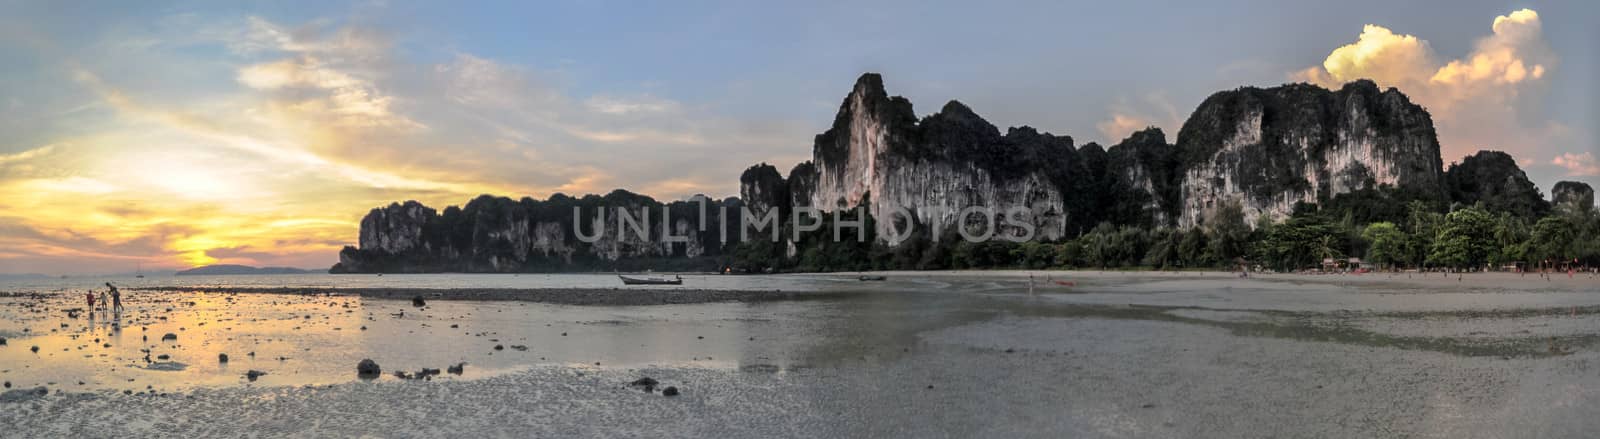 Panorama Railay beach in Krabi Thailand by weltreisendertj